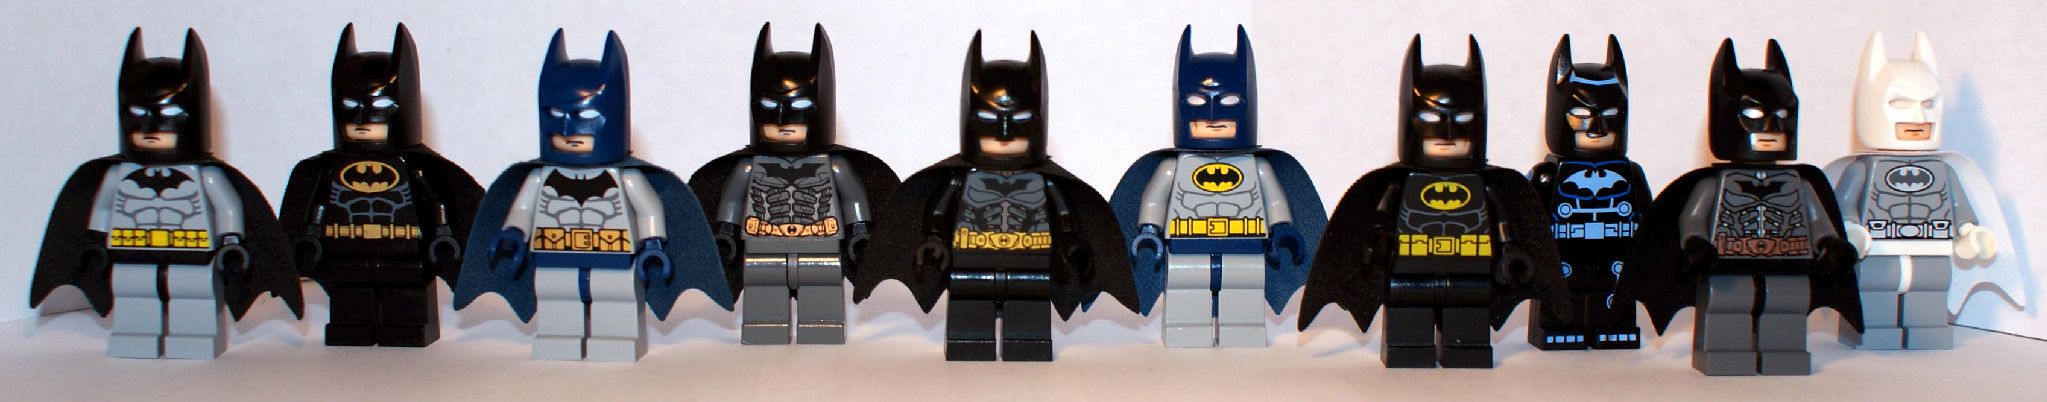 LEGO Batman Minifigures  Minifigures.co.uk